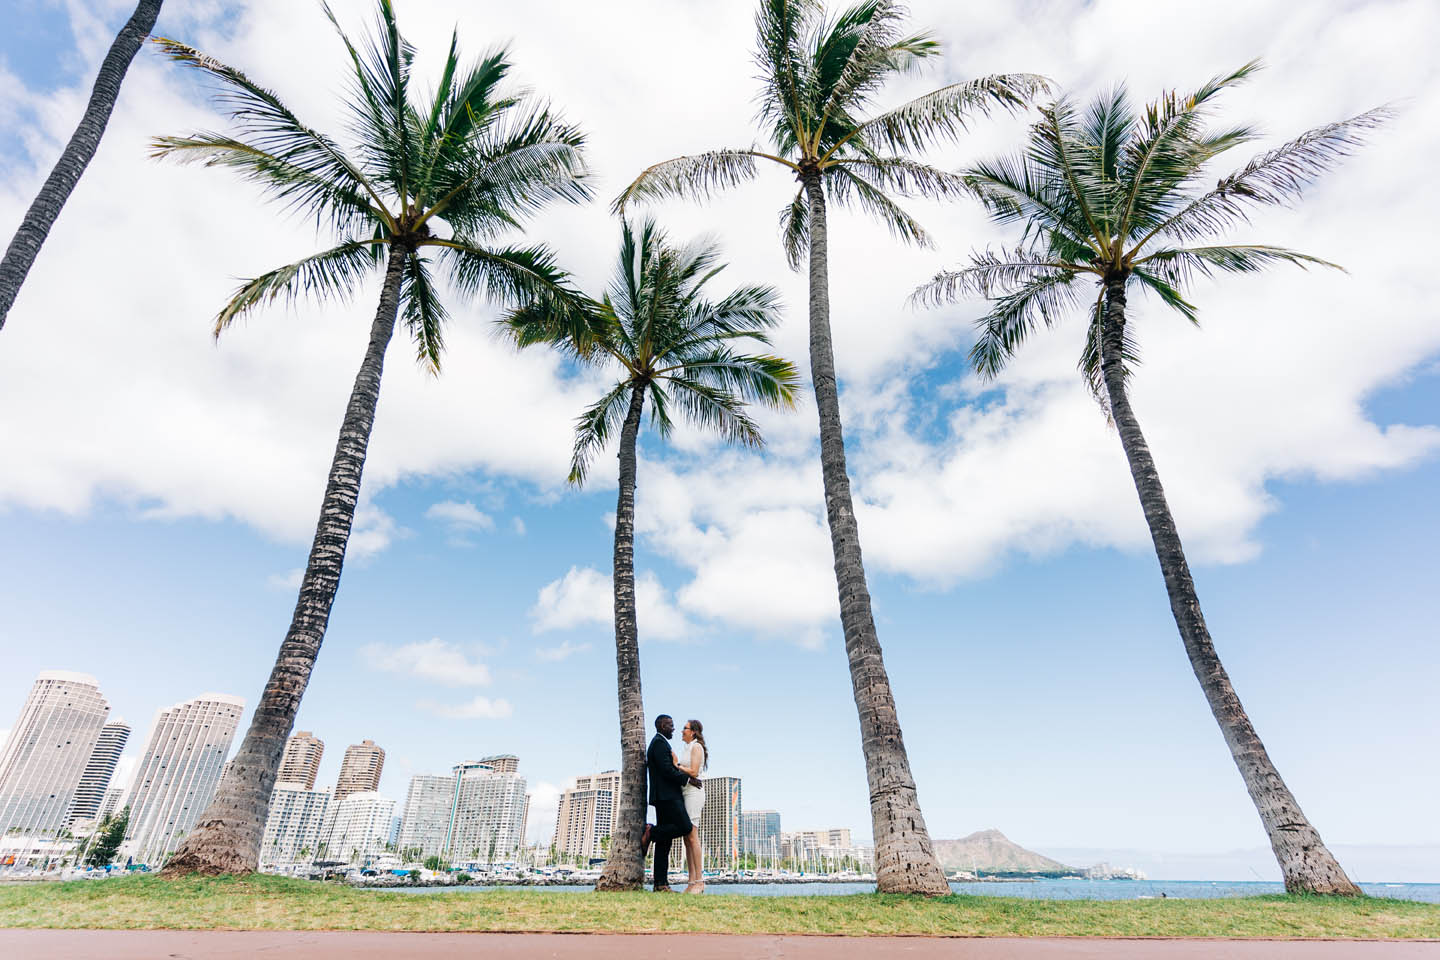 Magic Island Elopement - Hawaii Wedding Minister